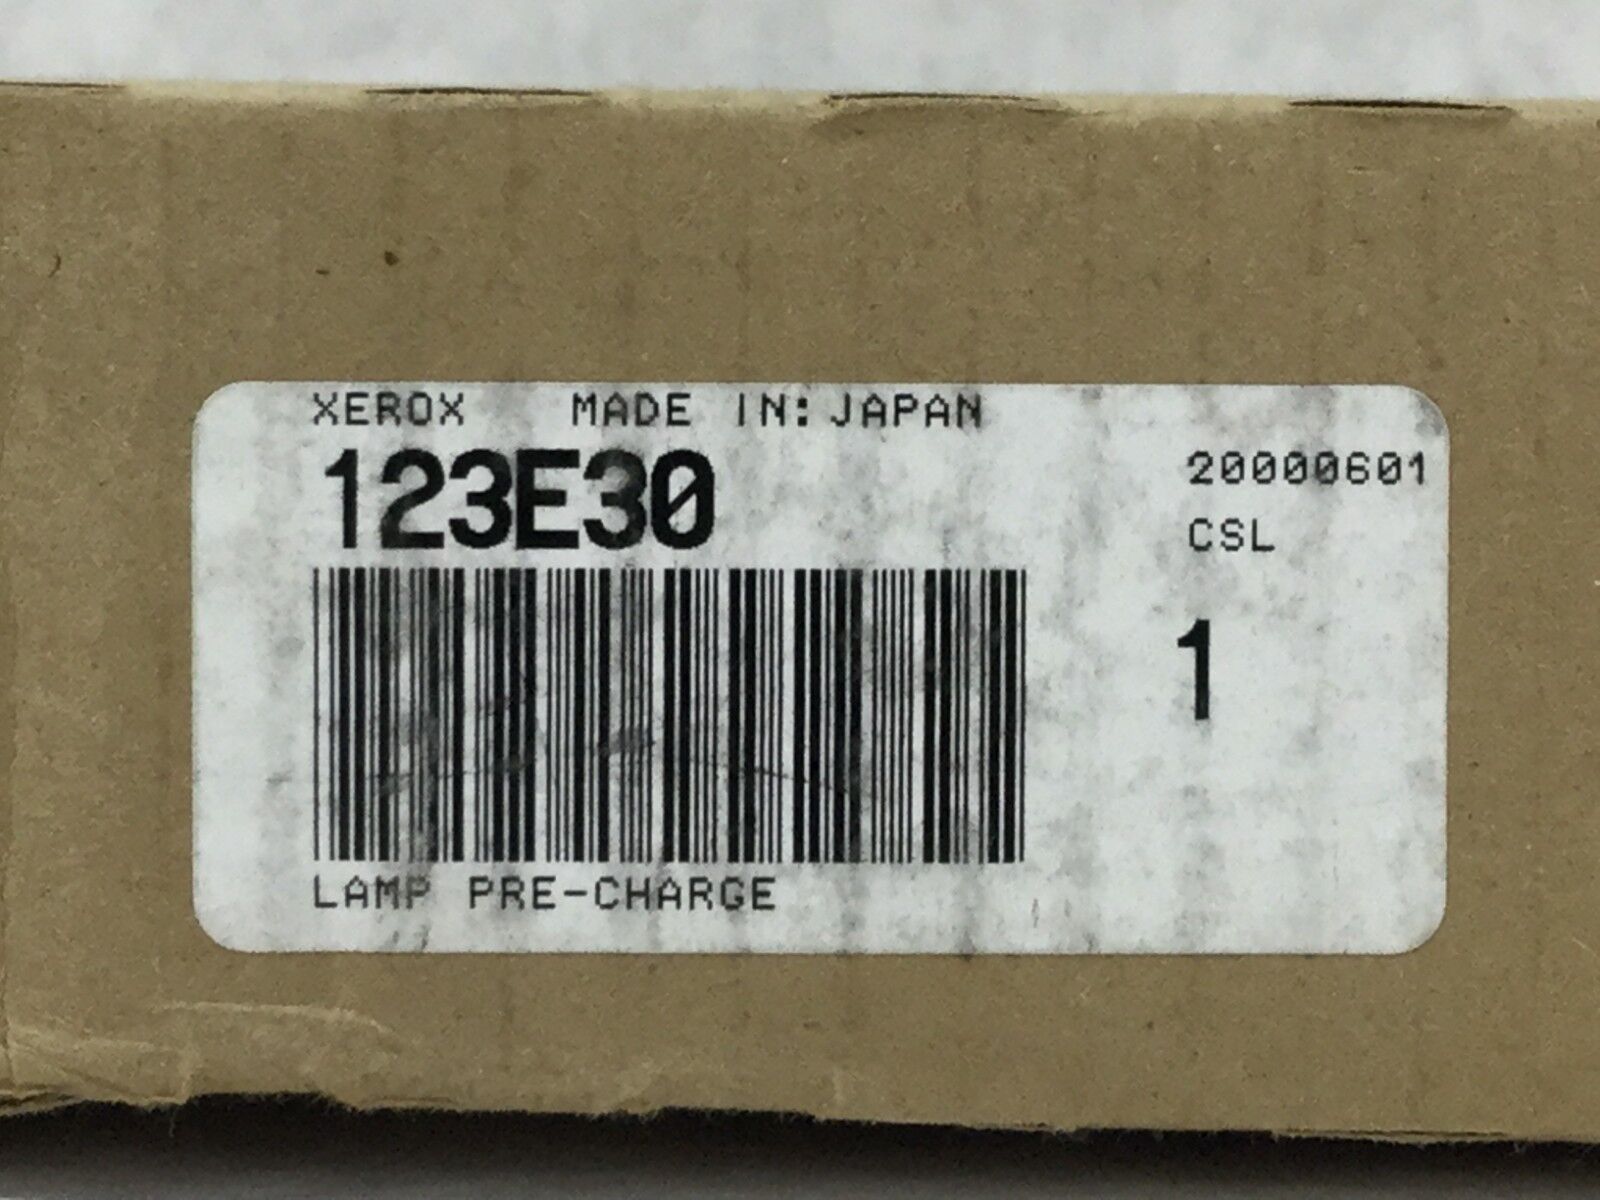 Genuine Xerox 123E30 Lamp Pre-Charge  New in Sealed Box